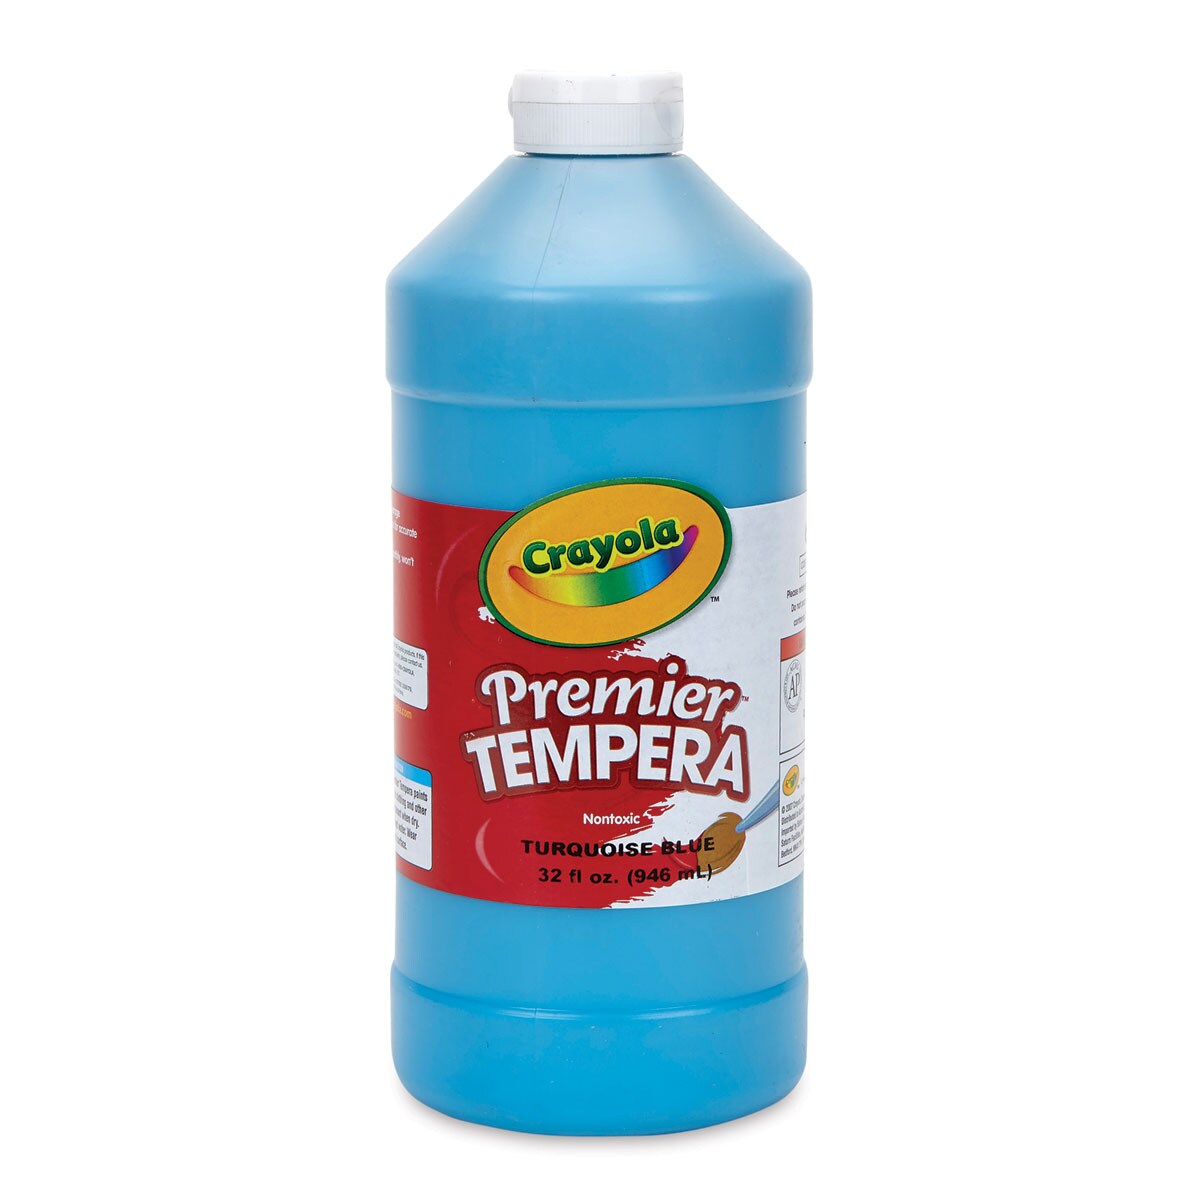 Crayola Premier Tempera - Turquoise, 32 oz bottle